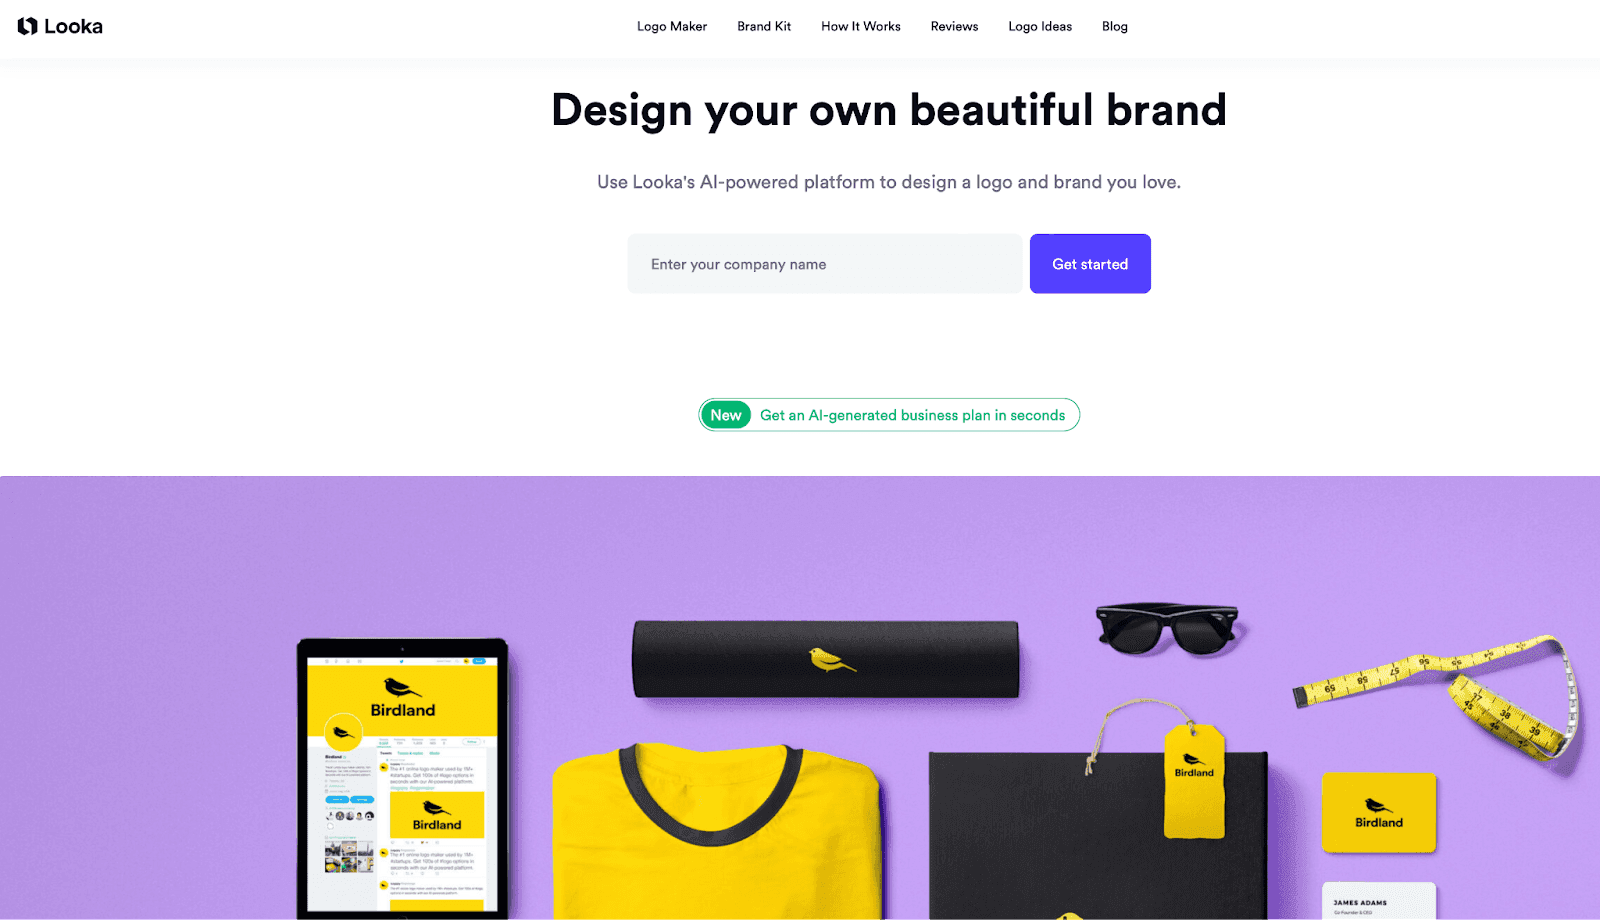 Looka website - Design your own beautiful brand